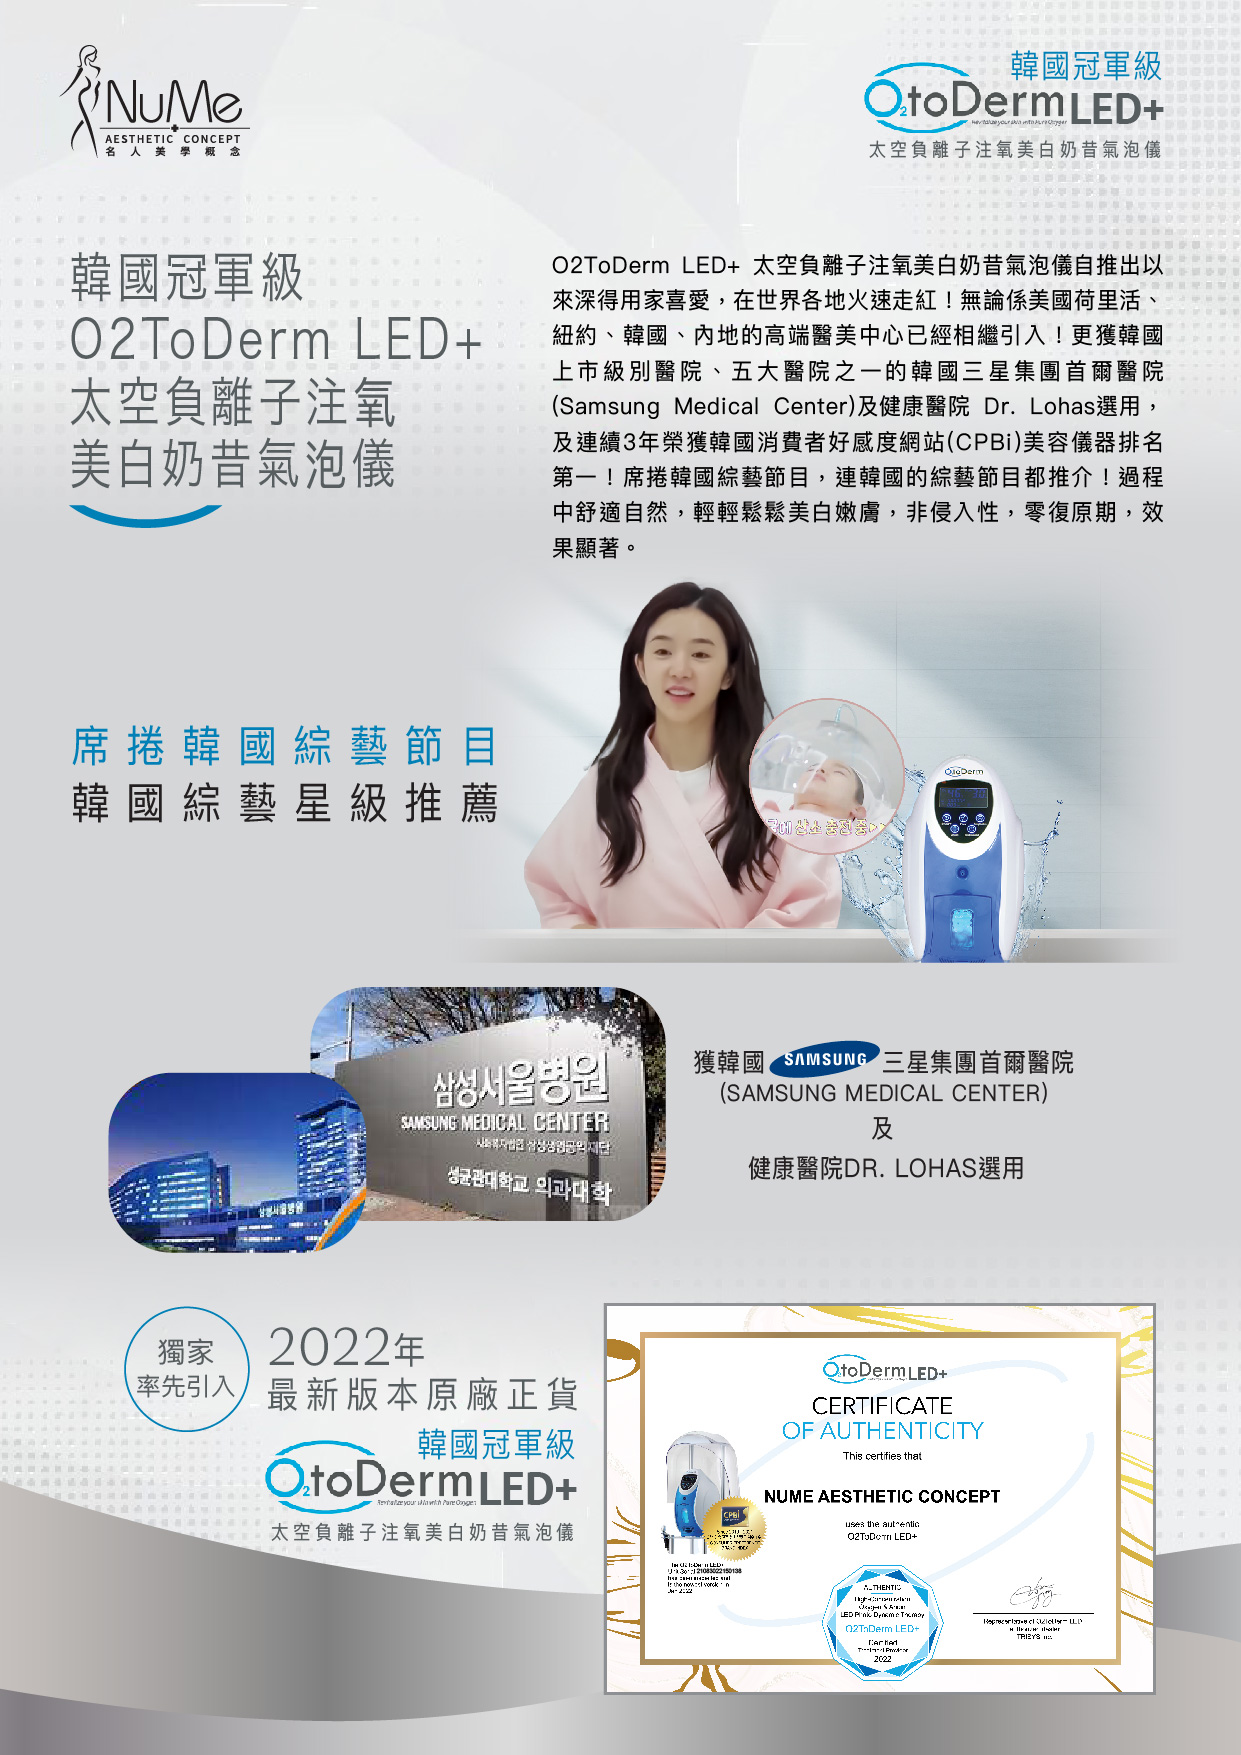 O2toDerm LED+ sales kit 20211222d_04.jpg